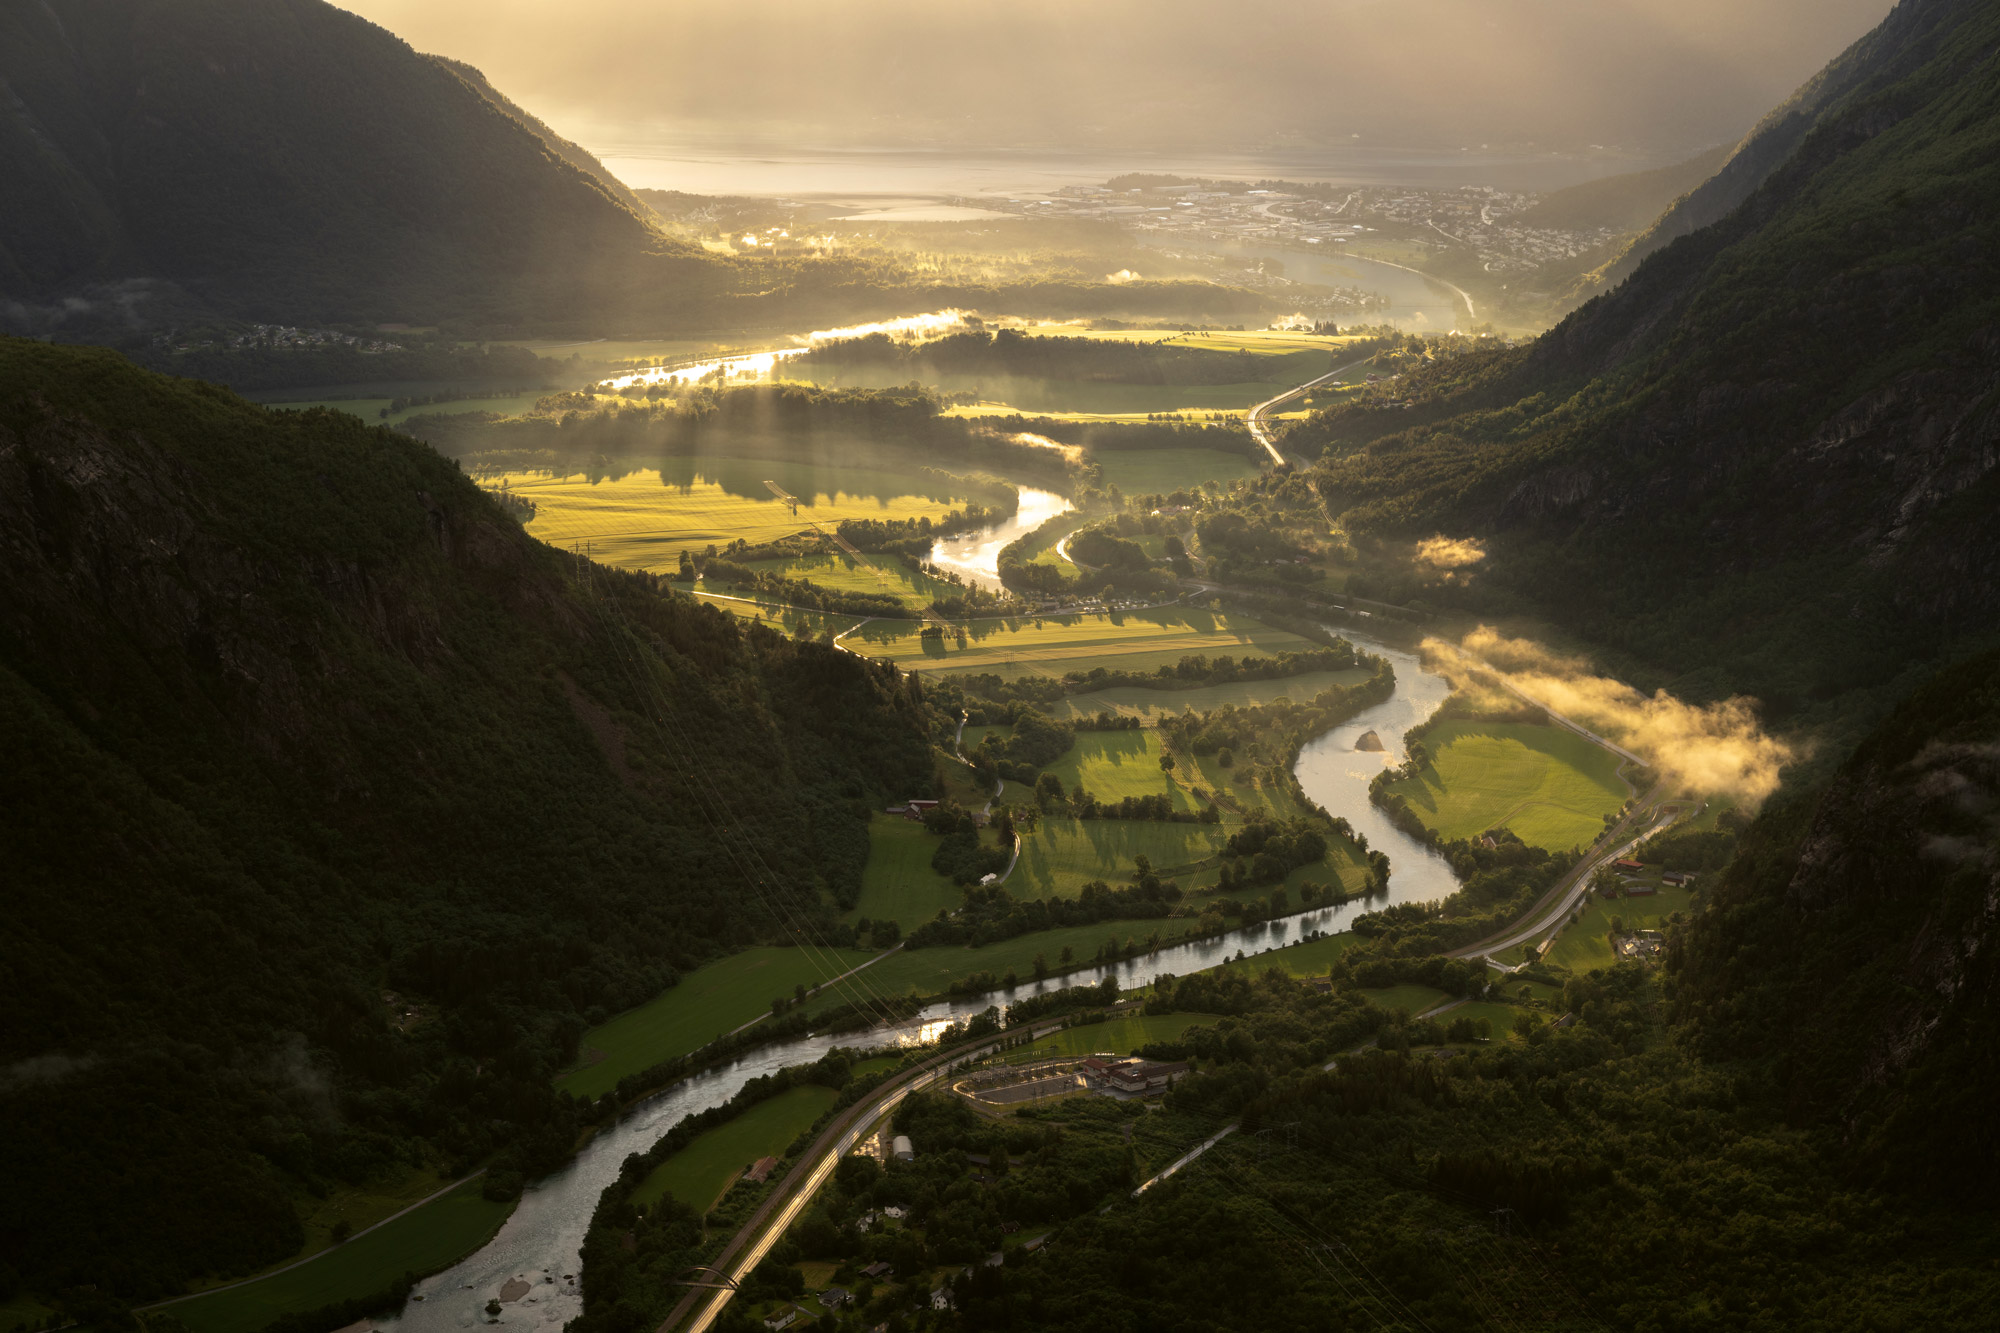 River running through lush Norwegian landscape at sunset